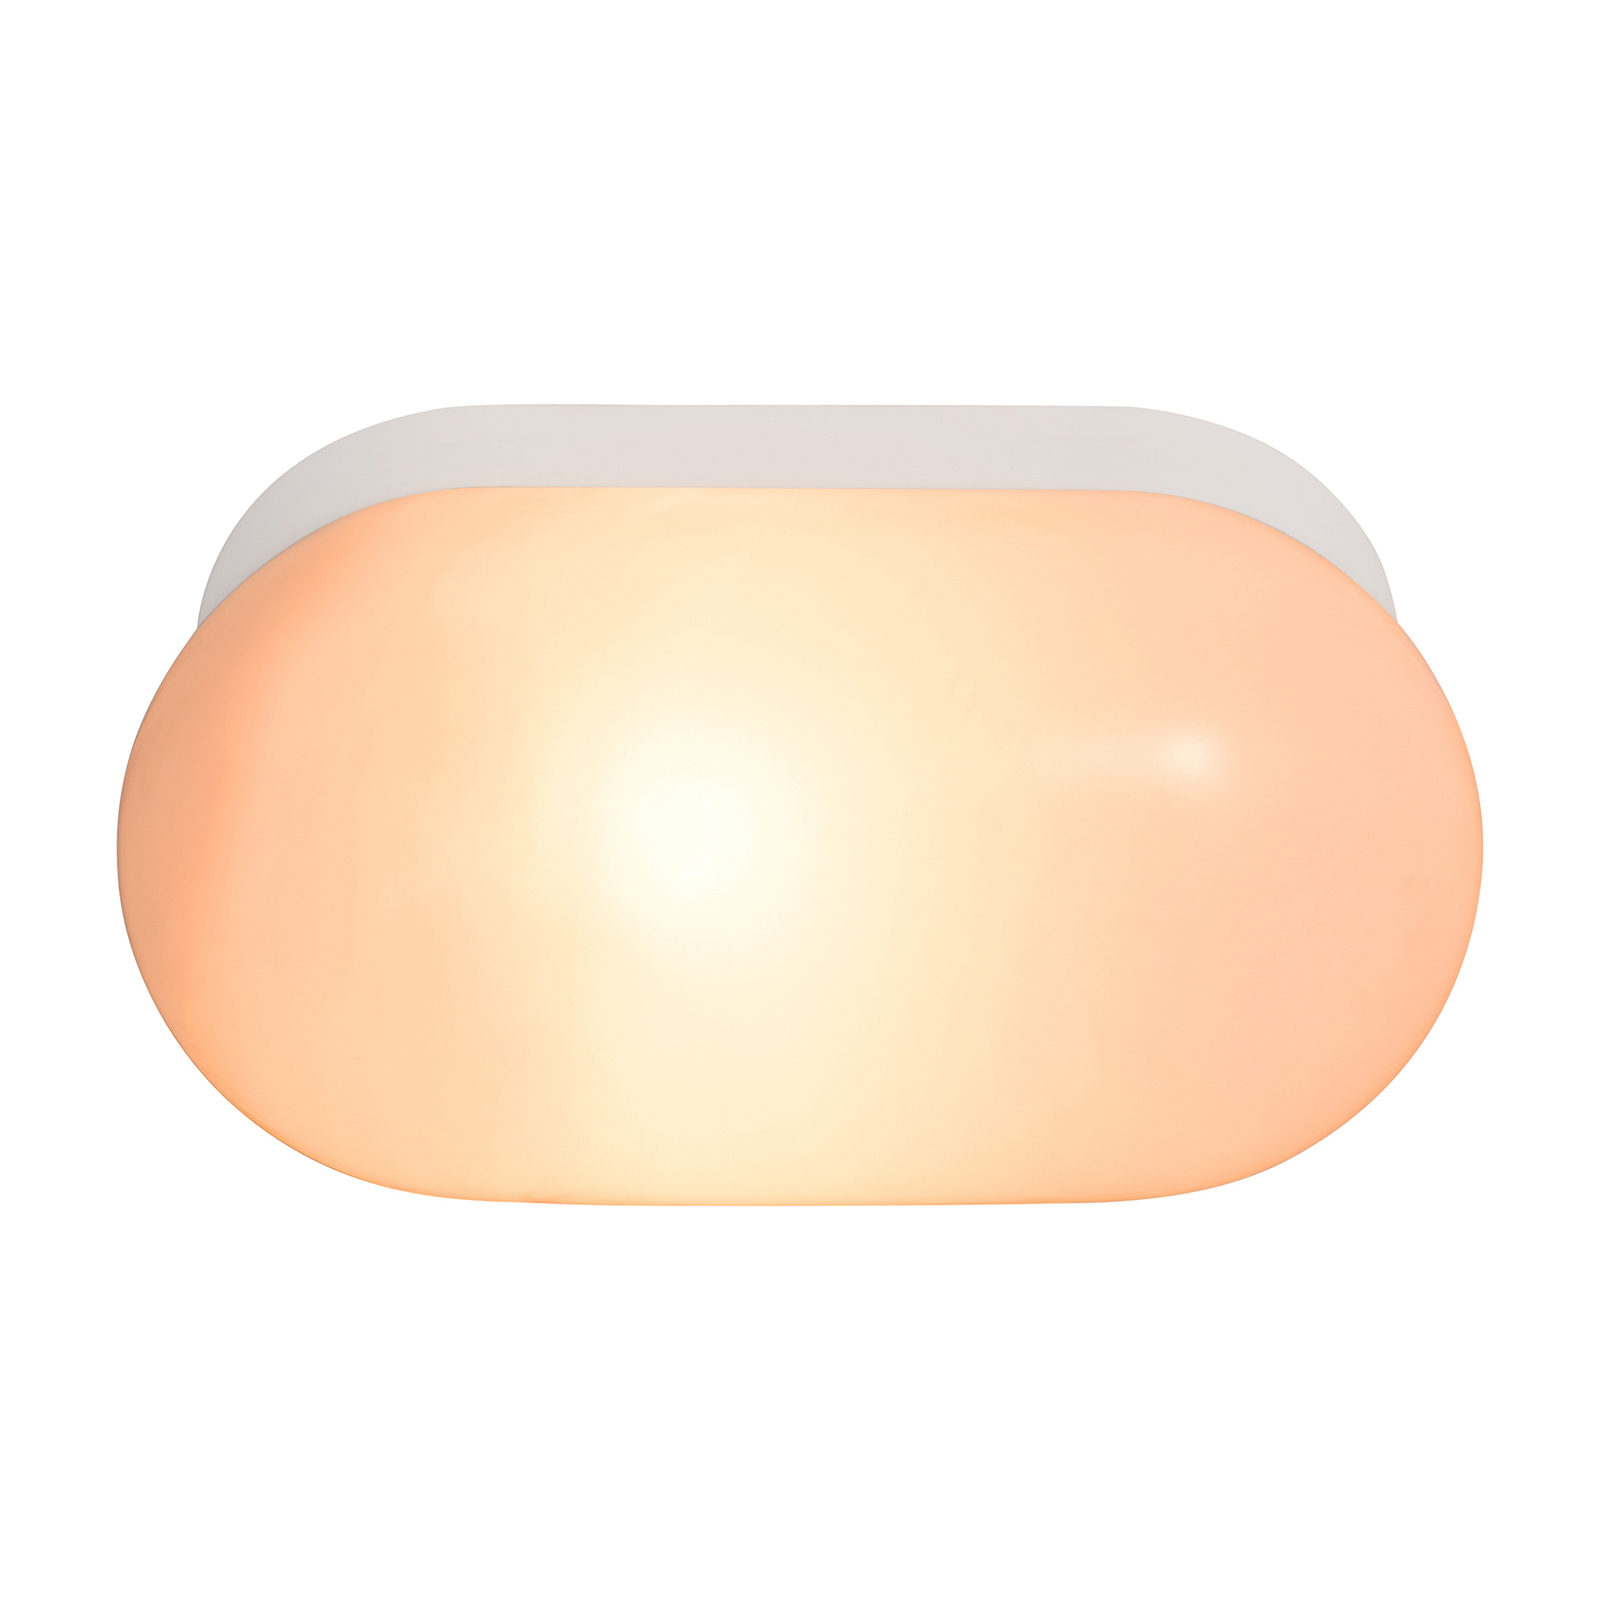 Foam wall light with an oval shape, IP44, white